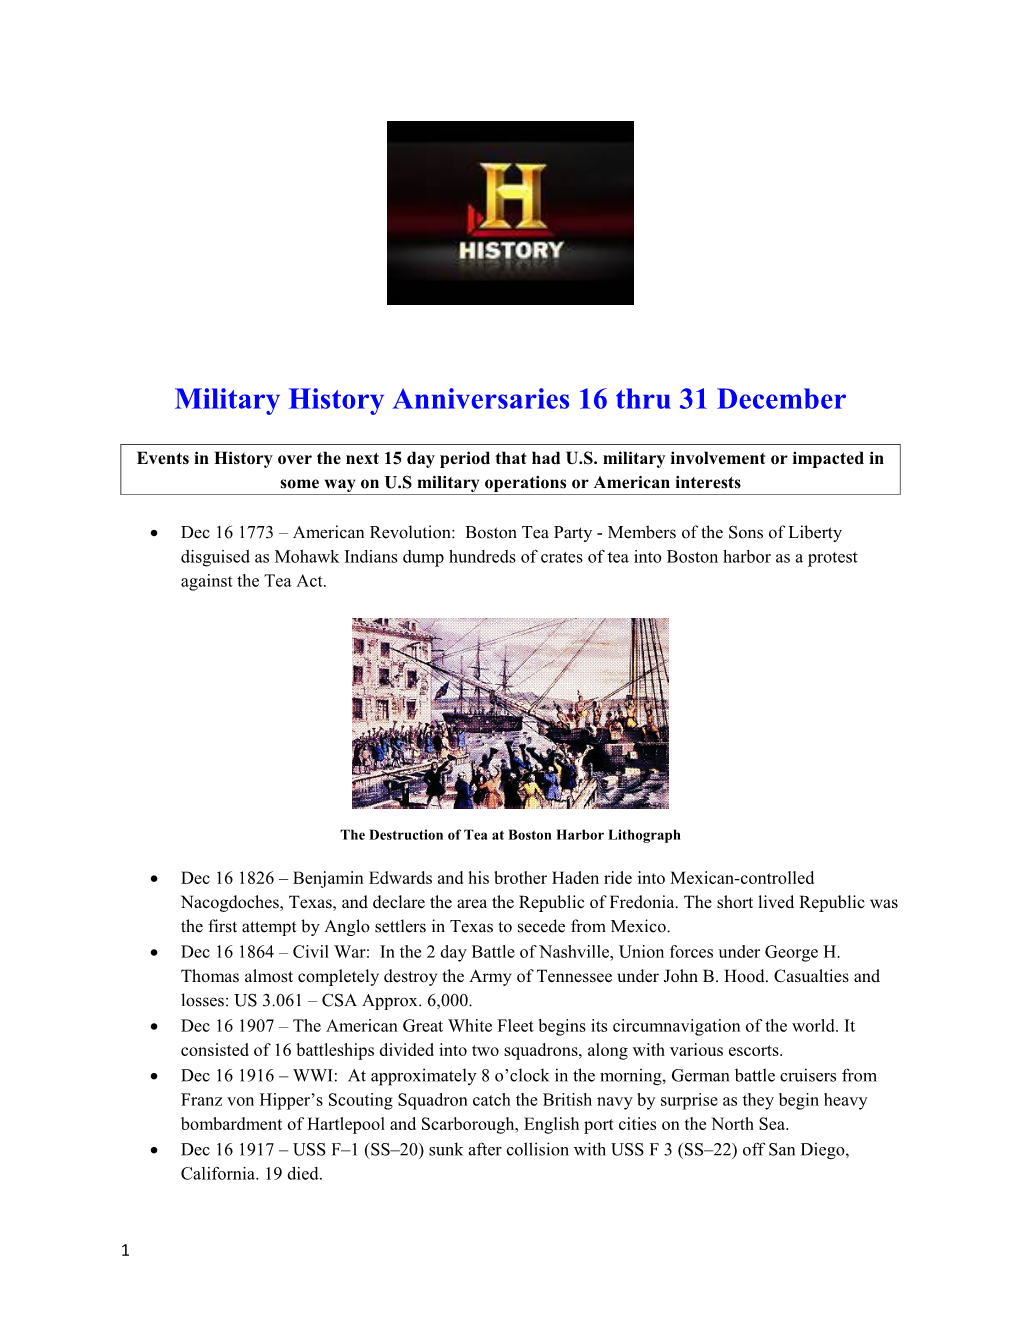 Military History Anniversaries 16 Thru 31December